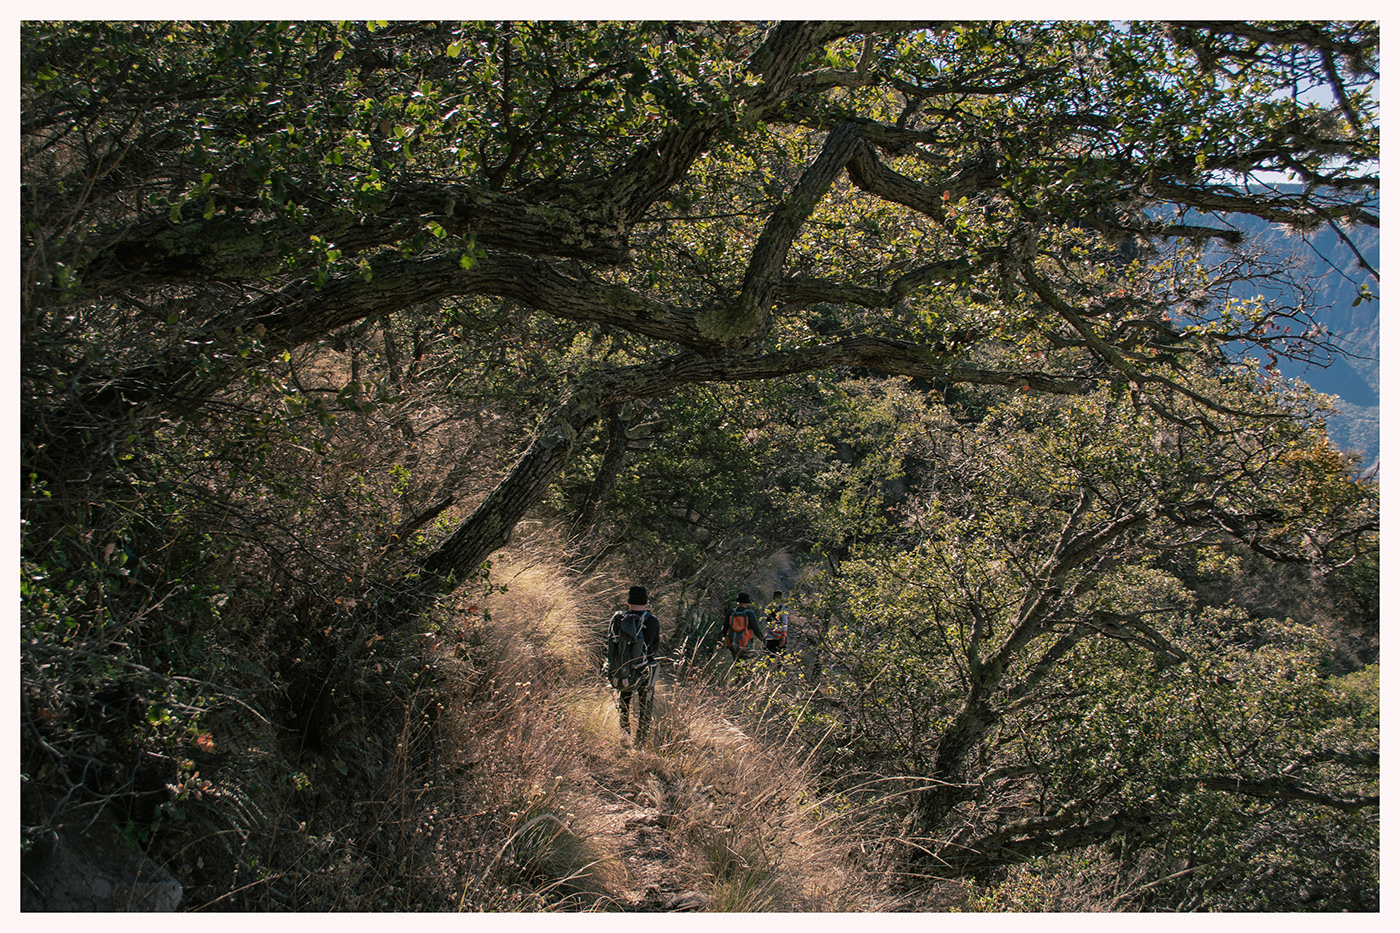 trailrunning Fotografia fotografo chihuahua chihuahua mexico cuu fotografiadocumental